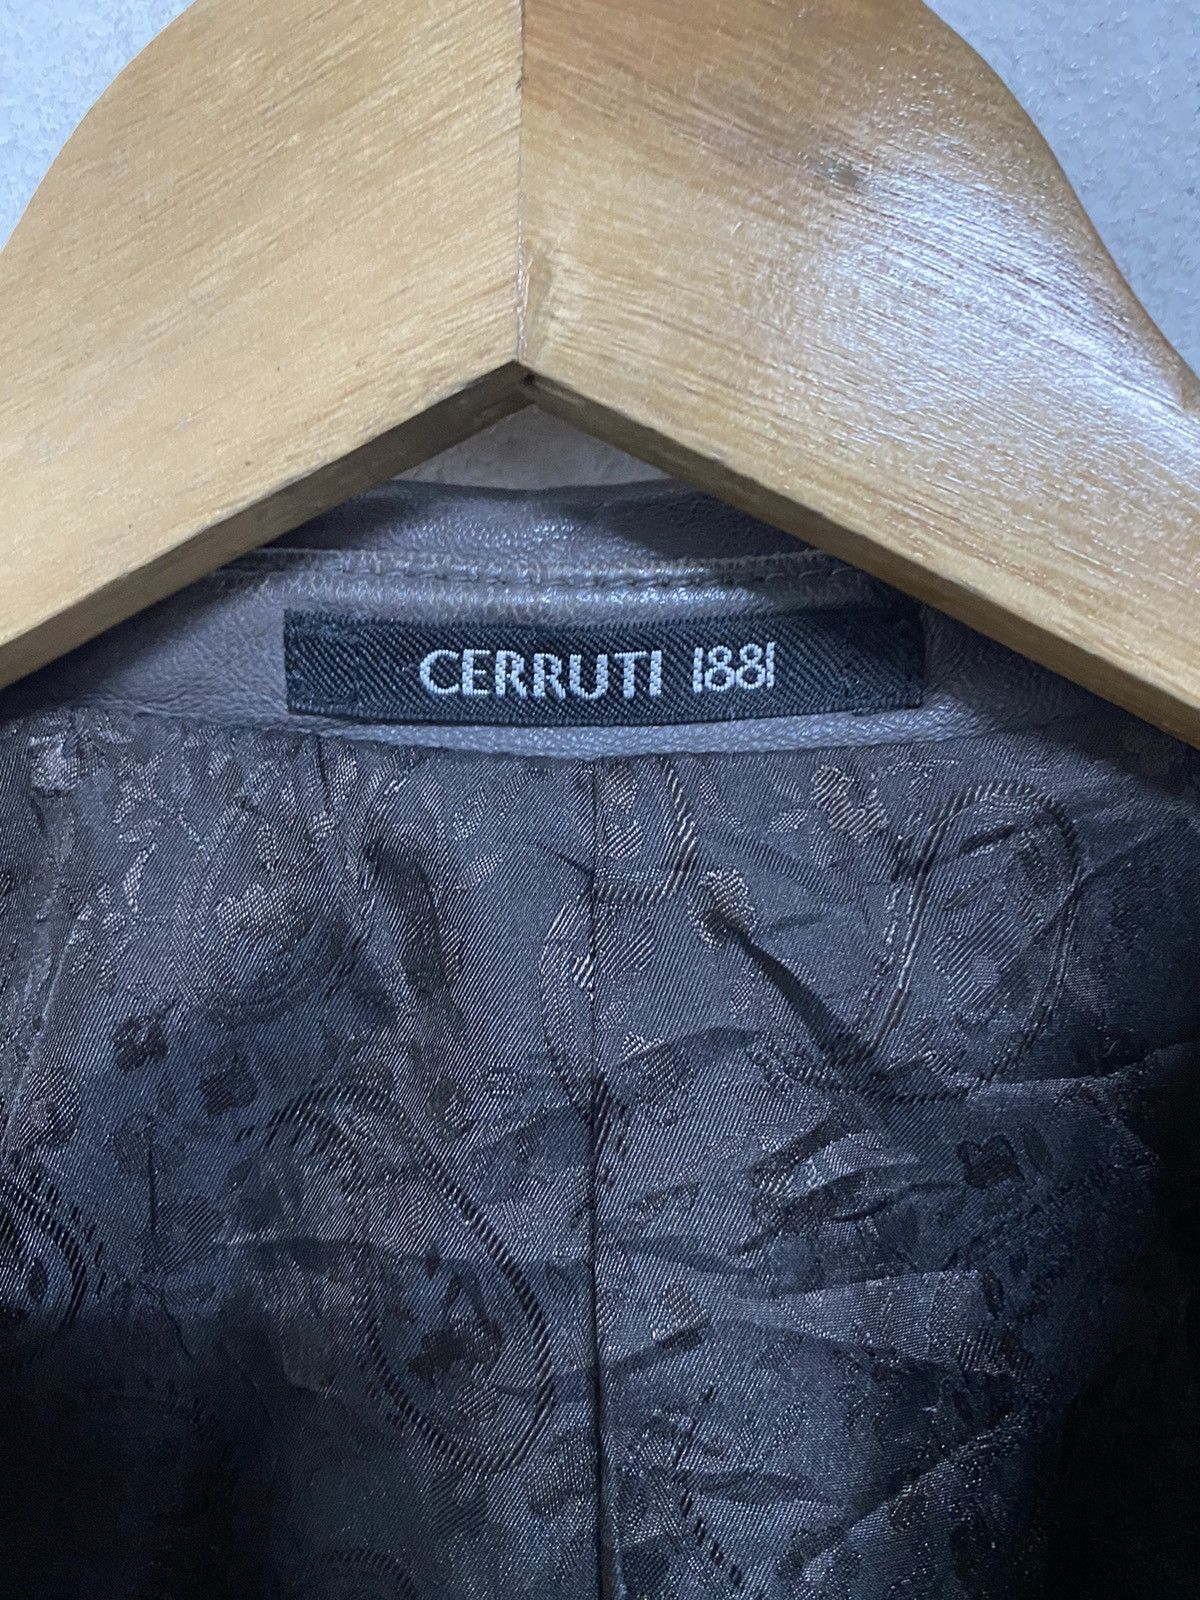 Cerruti 1881 Lambskin Leather Jacket - 8